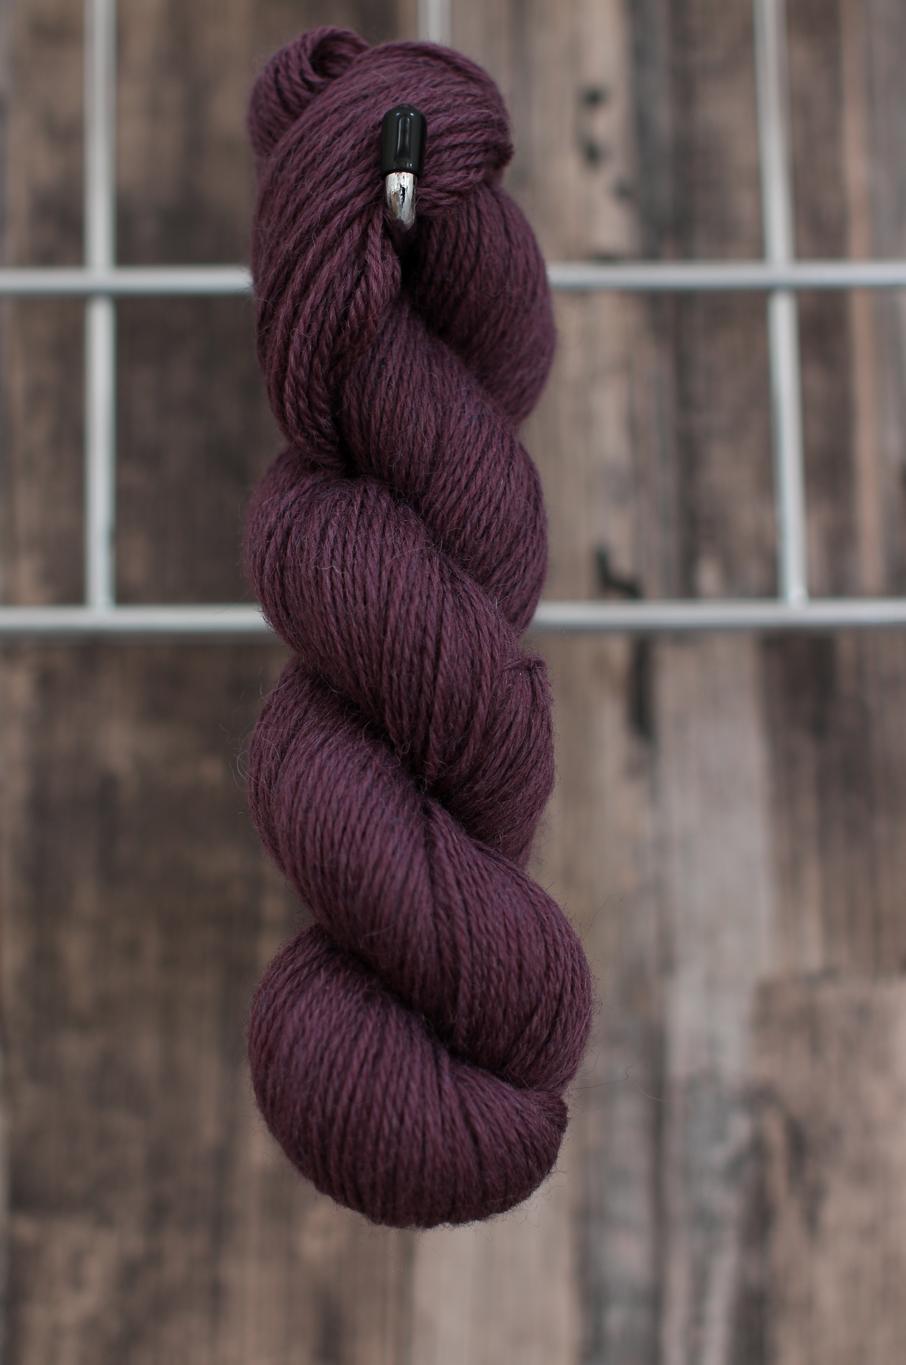 A single skein of purple wool hanging on a hook